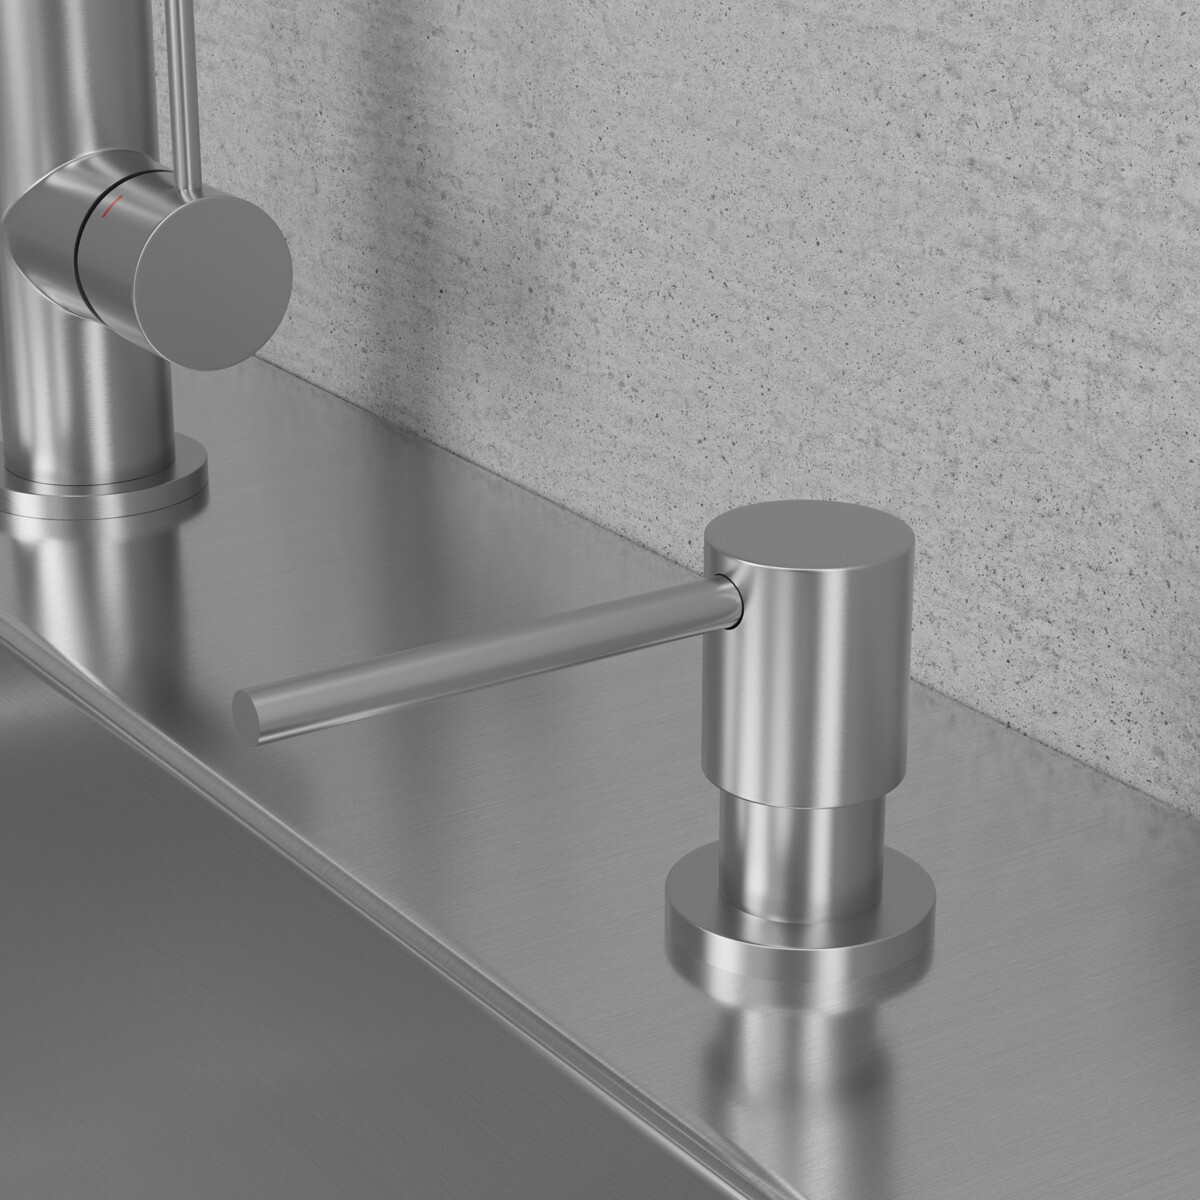 Saippua-annostelija Primy Steel Clean Dispenser lisäkuva